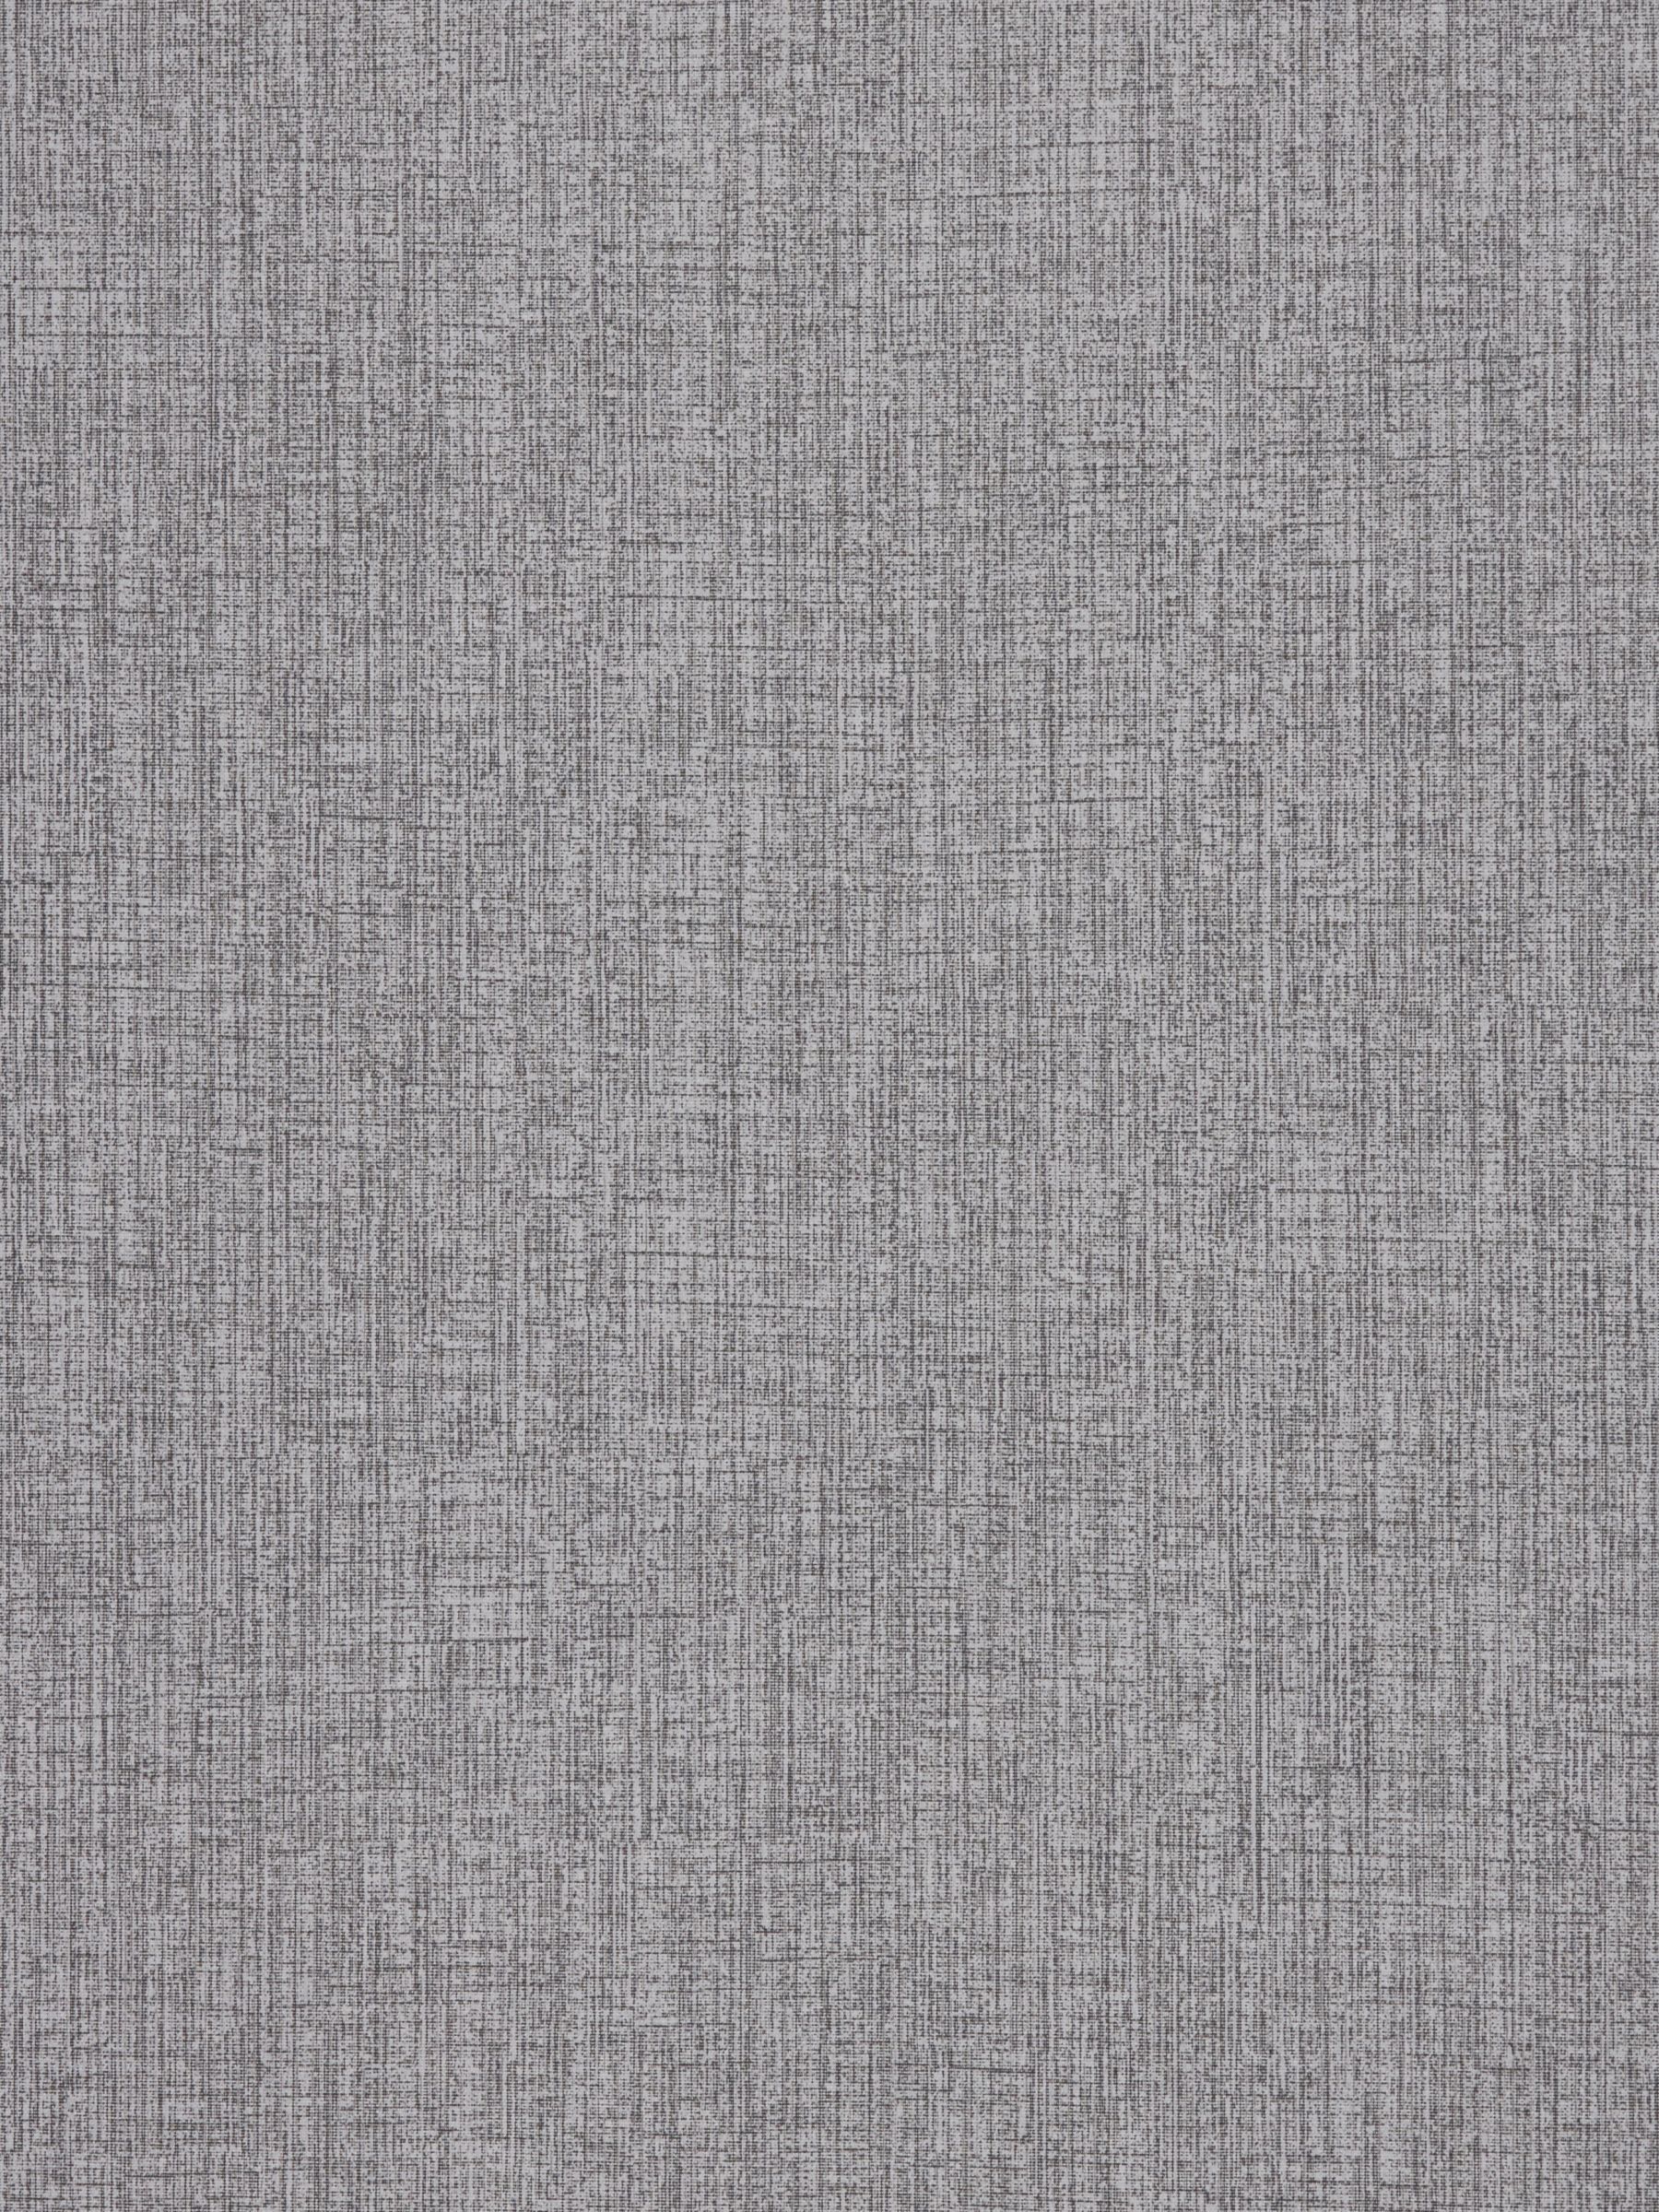 John Lewis Granada Plain Texture Made to Measure Blackout Roller Blind, Elegant Charcoal